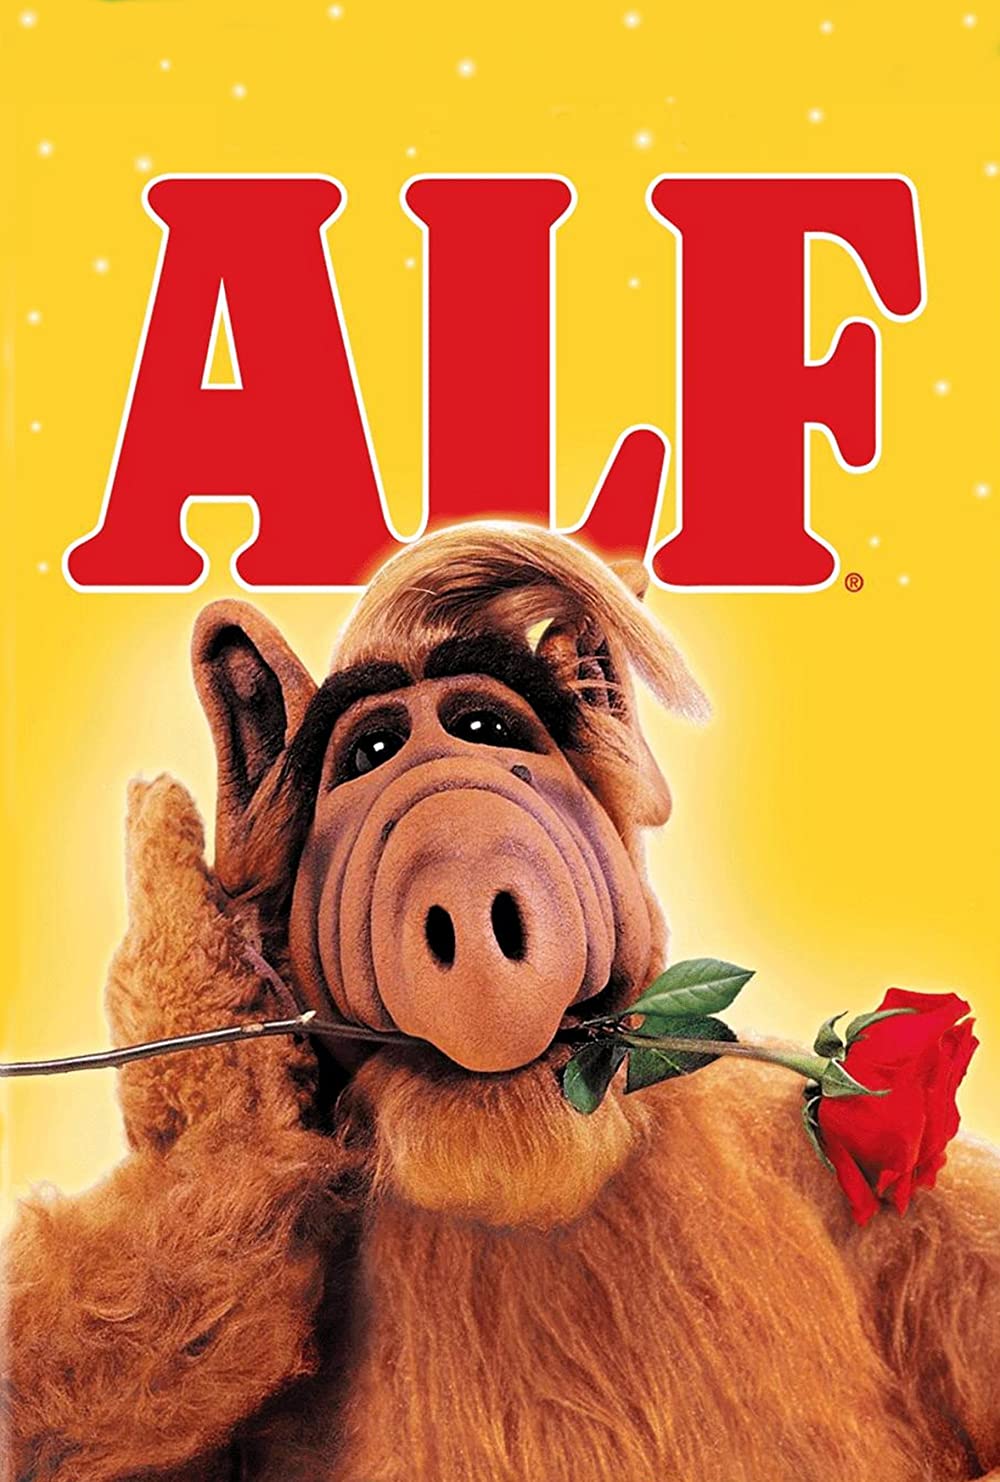 Альф (Сезон 1-4) / Alf (Season 1-4) (1986–1990) WEB-DL 1080p Ukr/Eng | Sub Eng